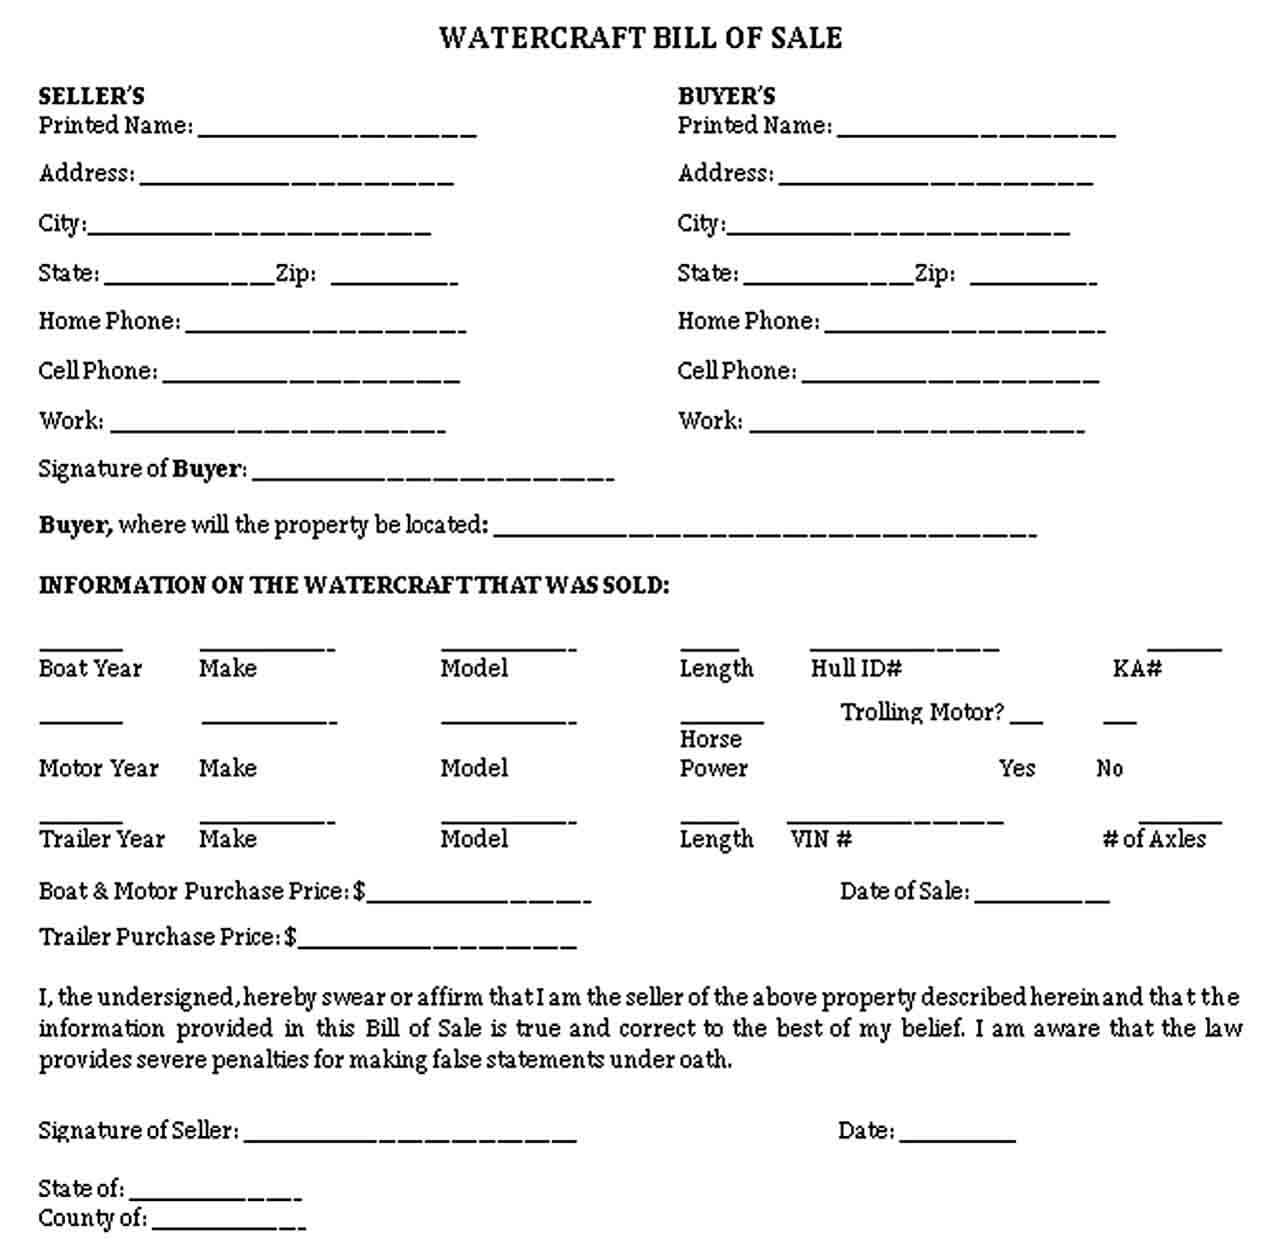 Personal Watercraft Bill of Sale